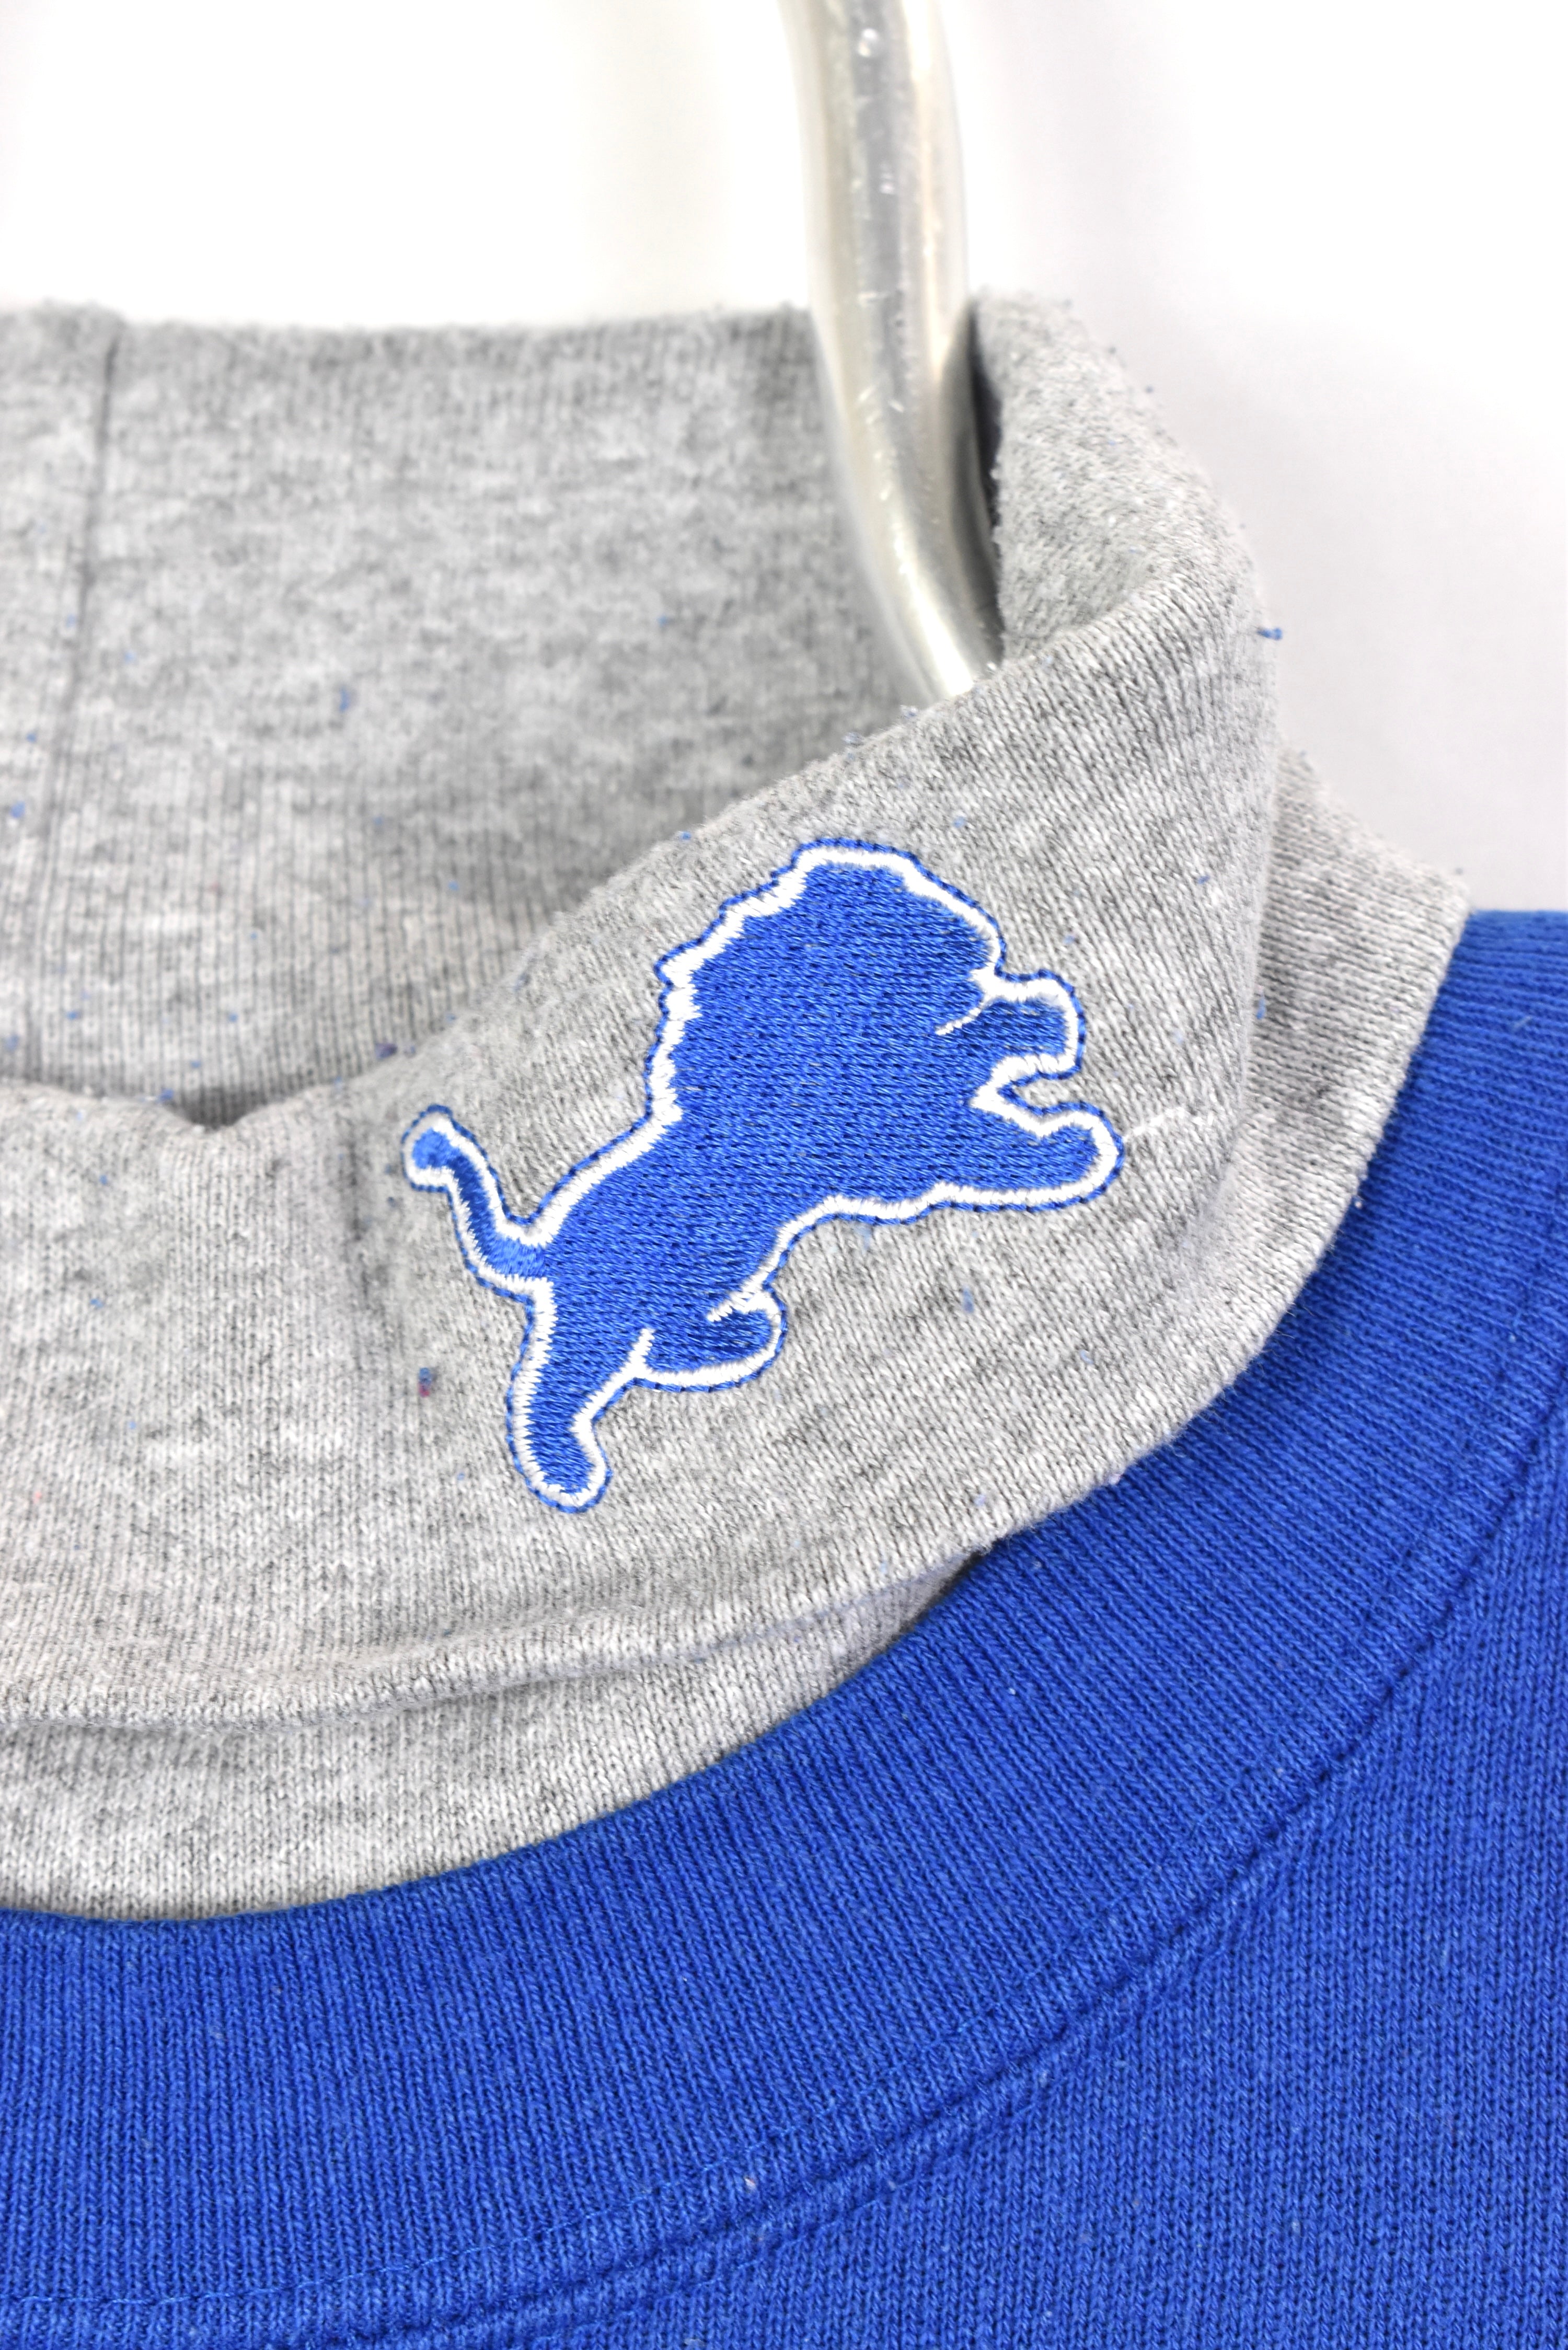 Vintage NFL Detroit lions embroidered turtle neck blue sweatshirt | XL PRO SPORT